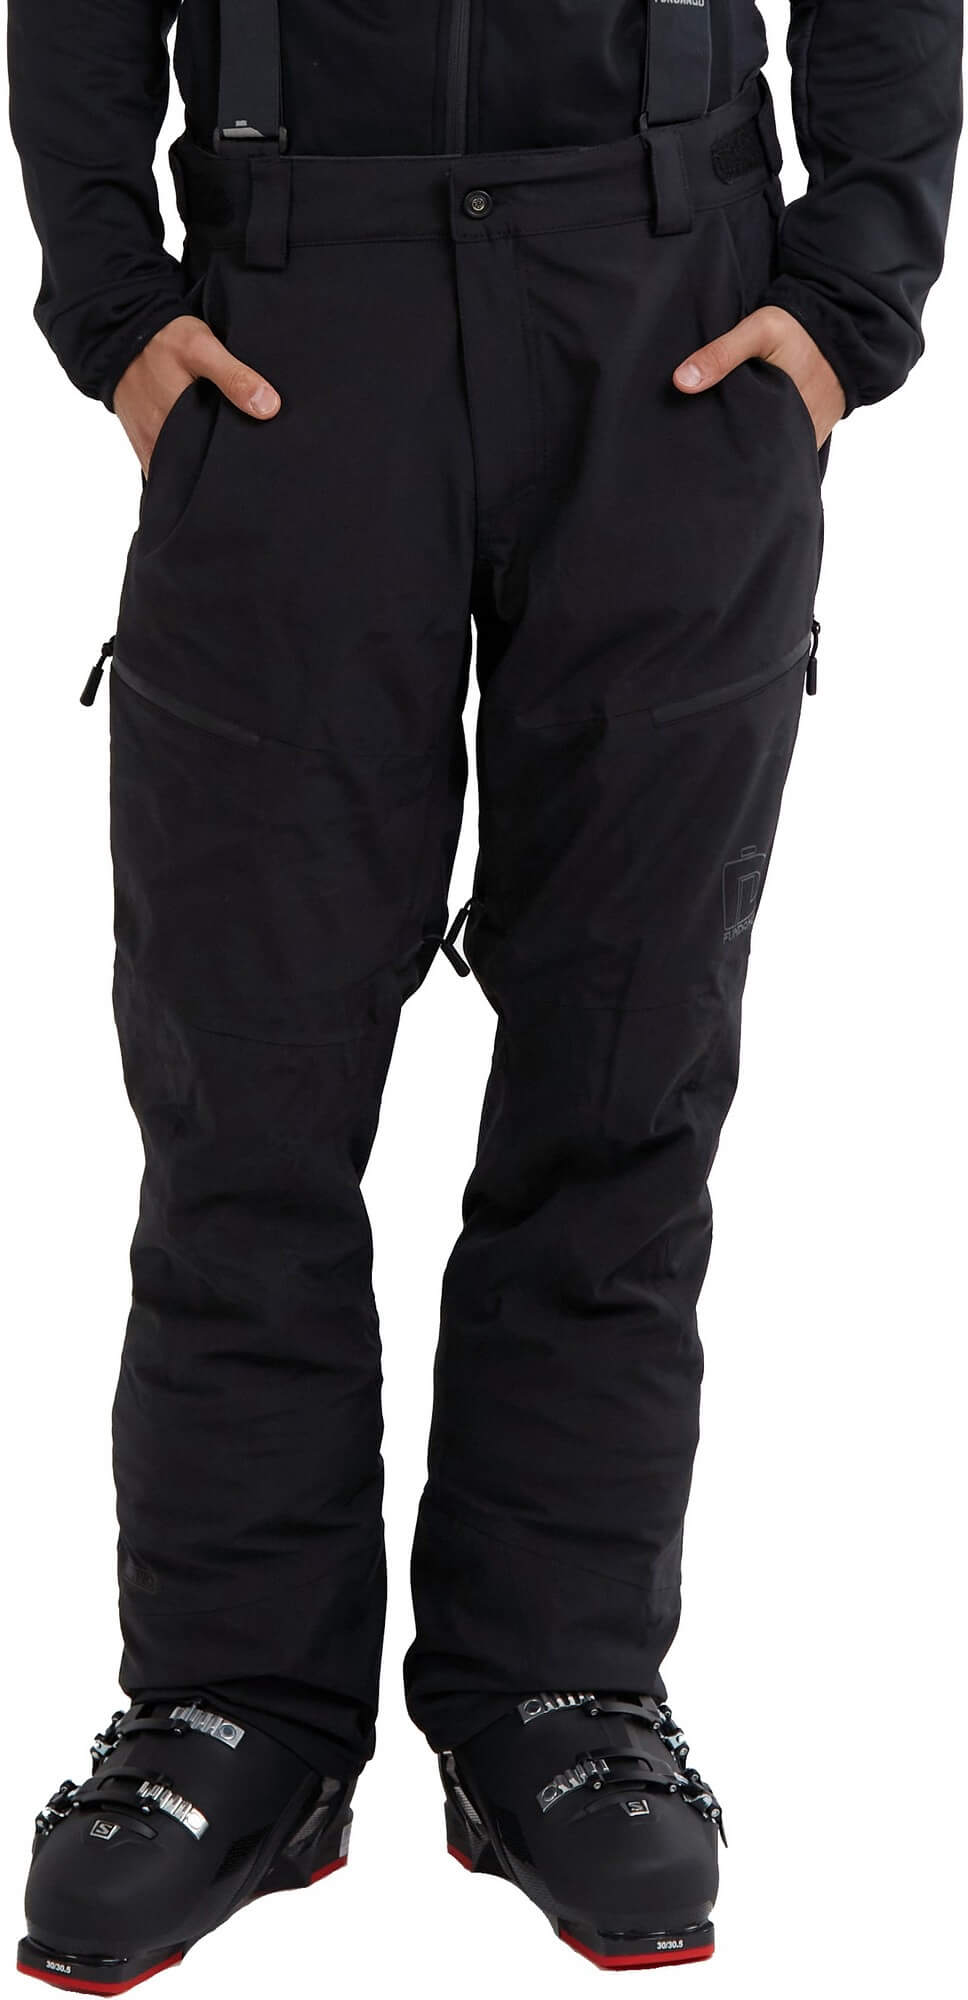 Men’s ski/snowboard trousers